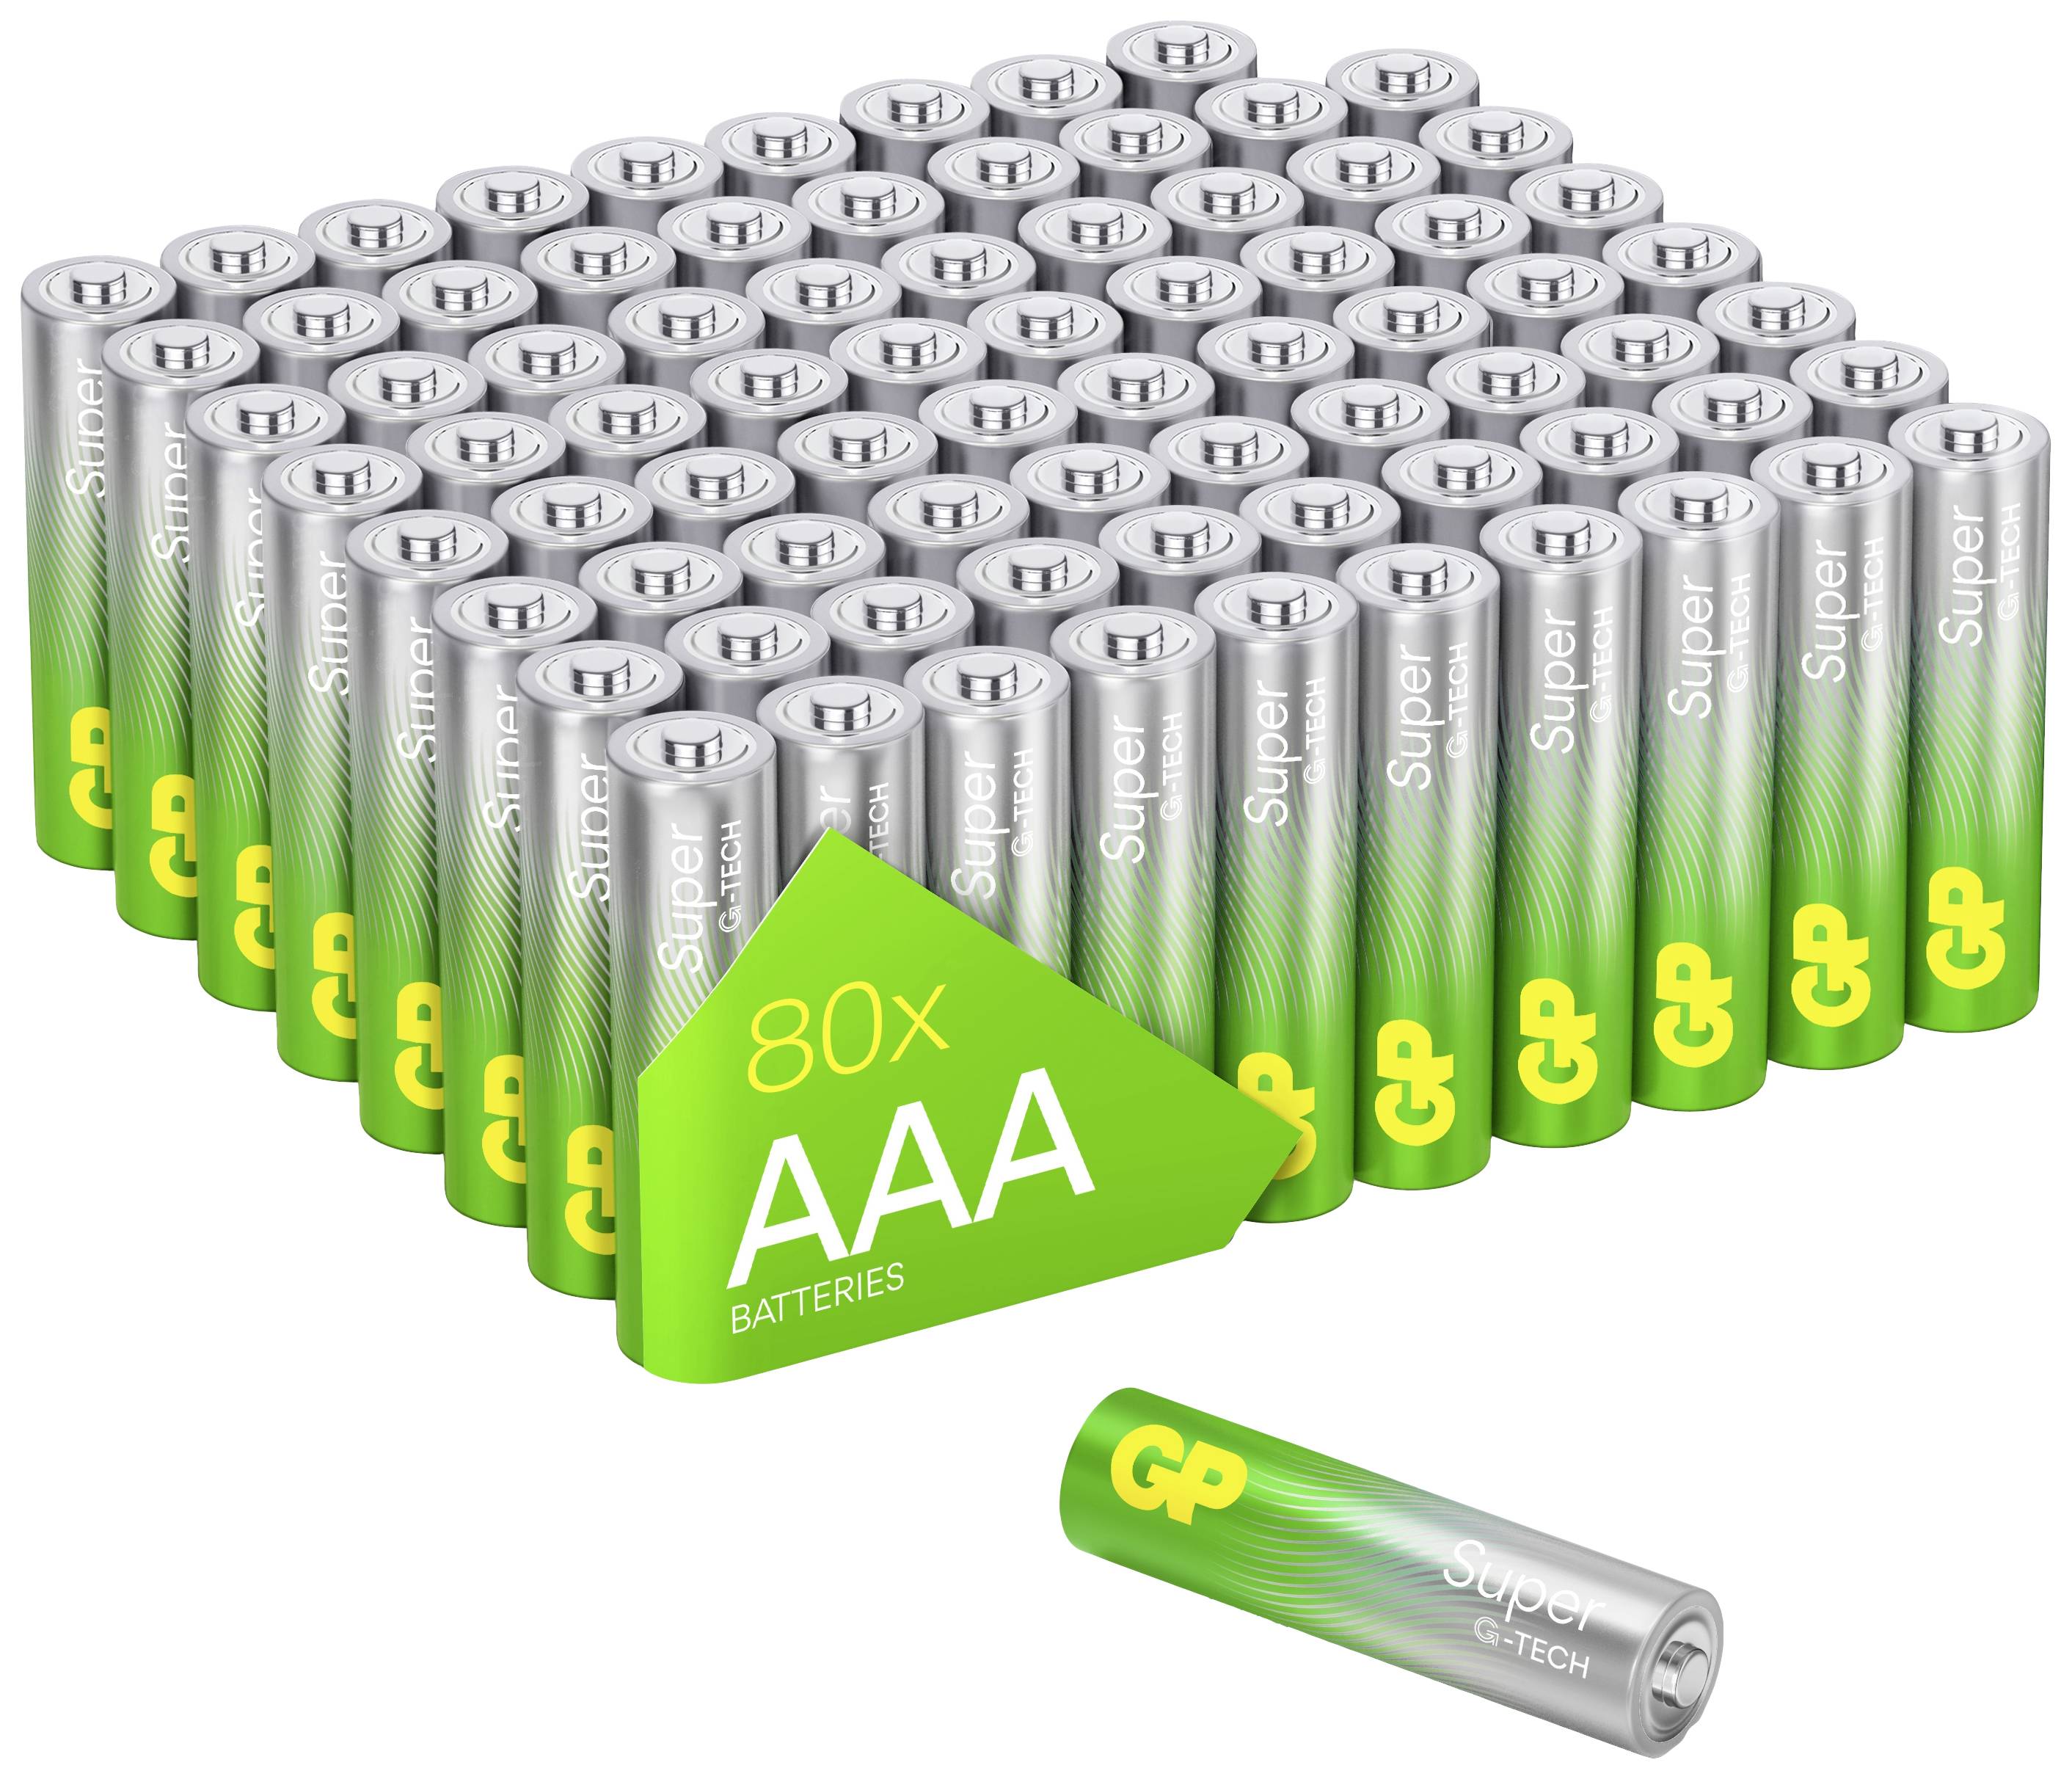 Батарейки GP G-Tech AAA. Соло -ААА: 1,5v Alkaline 30 %. GP super Alkaline Battery. GP батарейки Мадагаскара. Gp batteries super